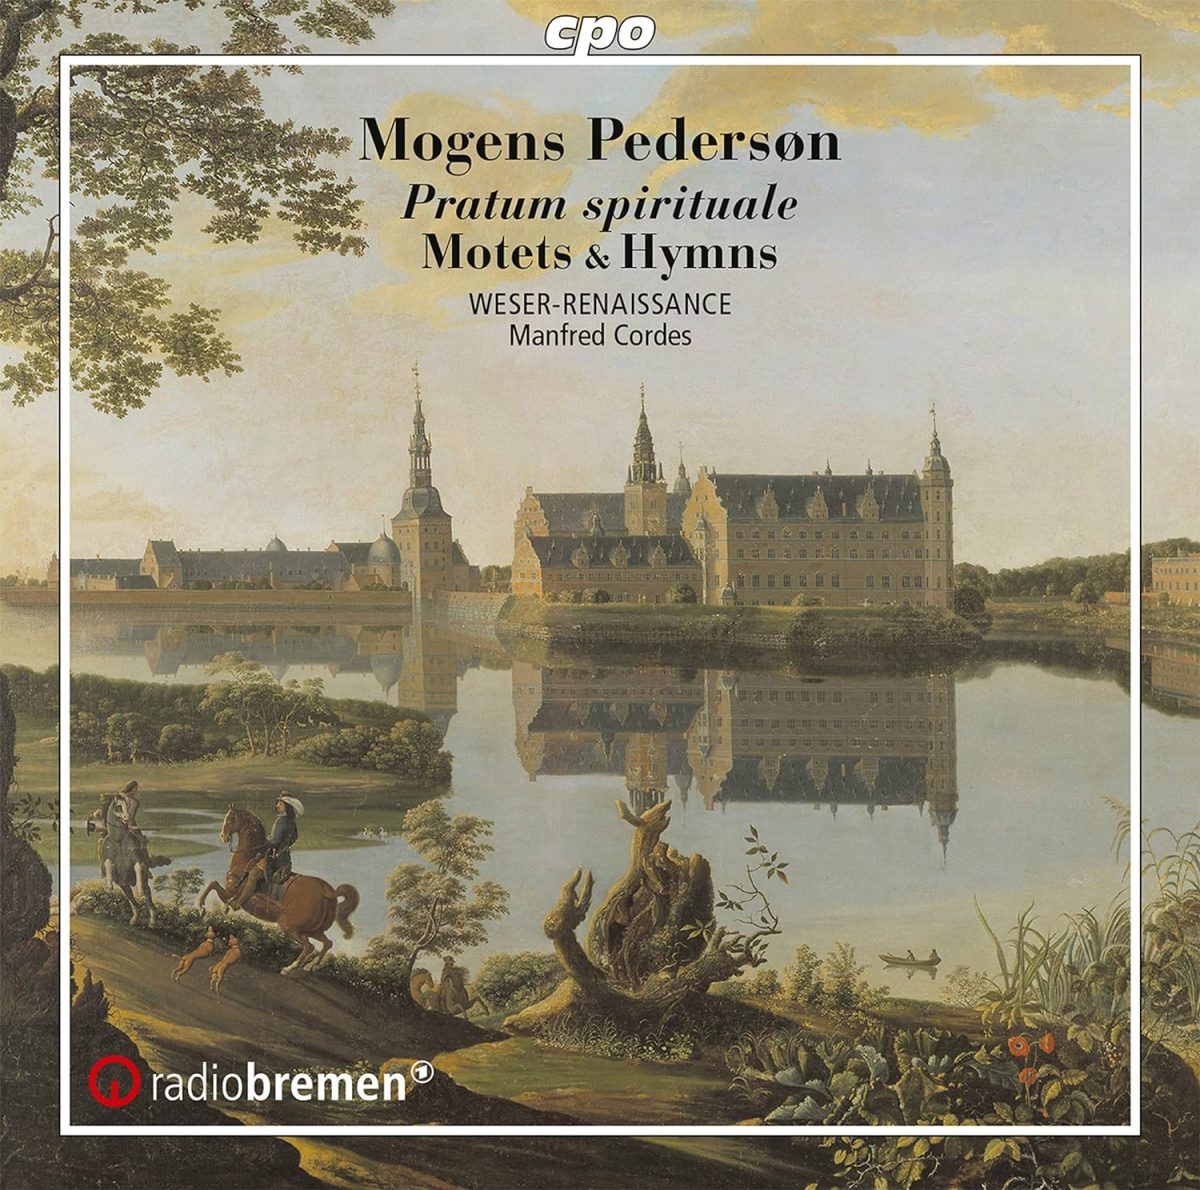 CD cover Mogens Pederson Pratum spirituale Weser-Renaissance